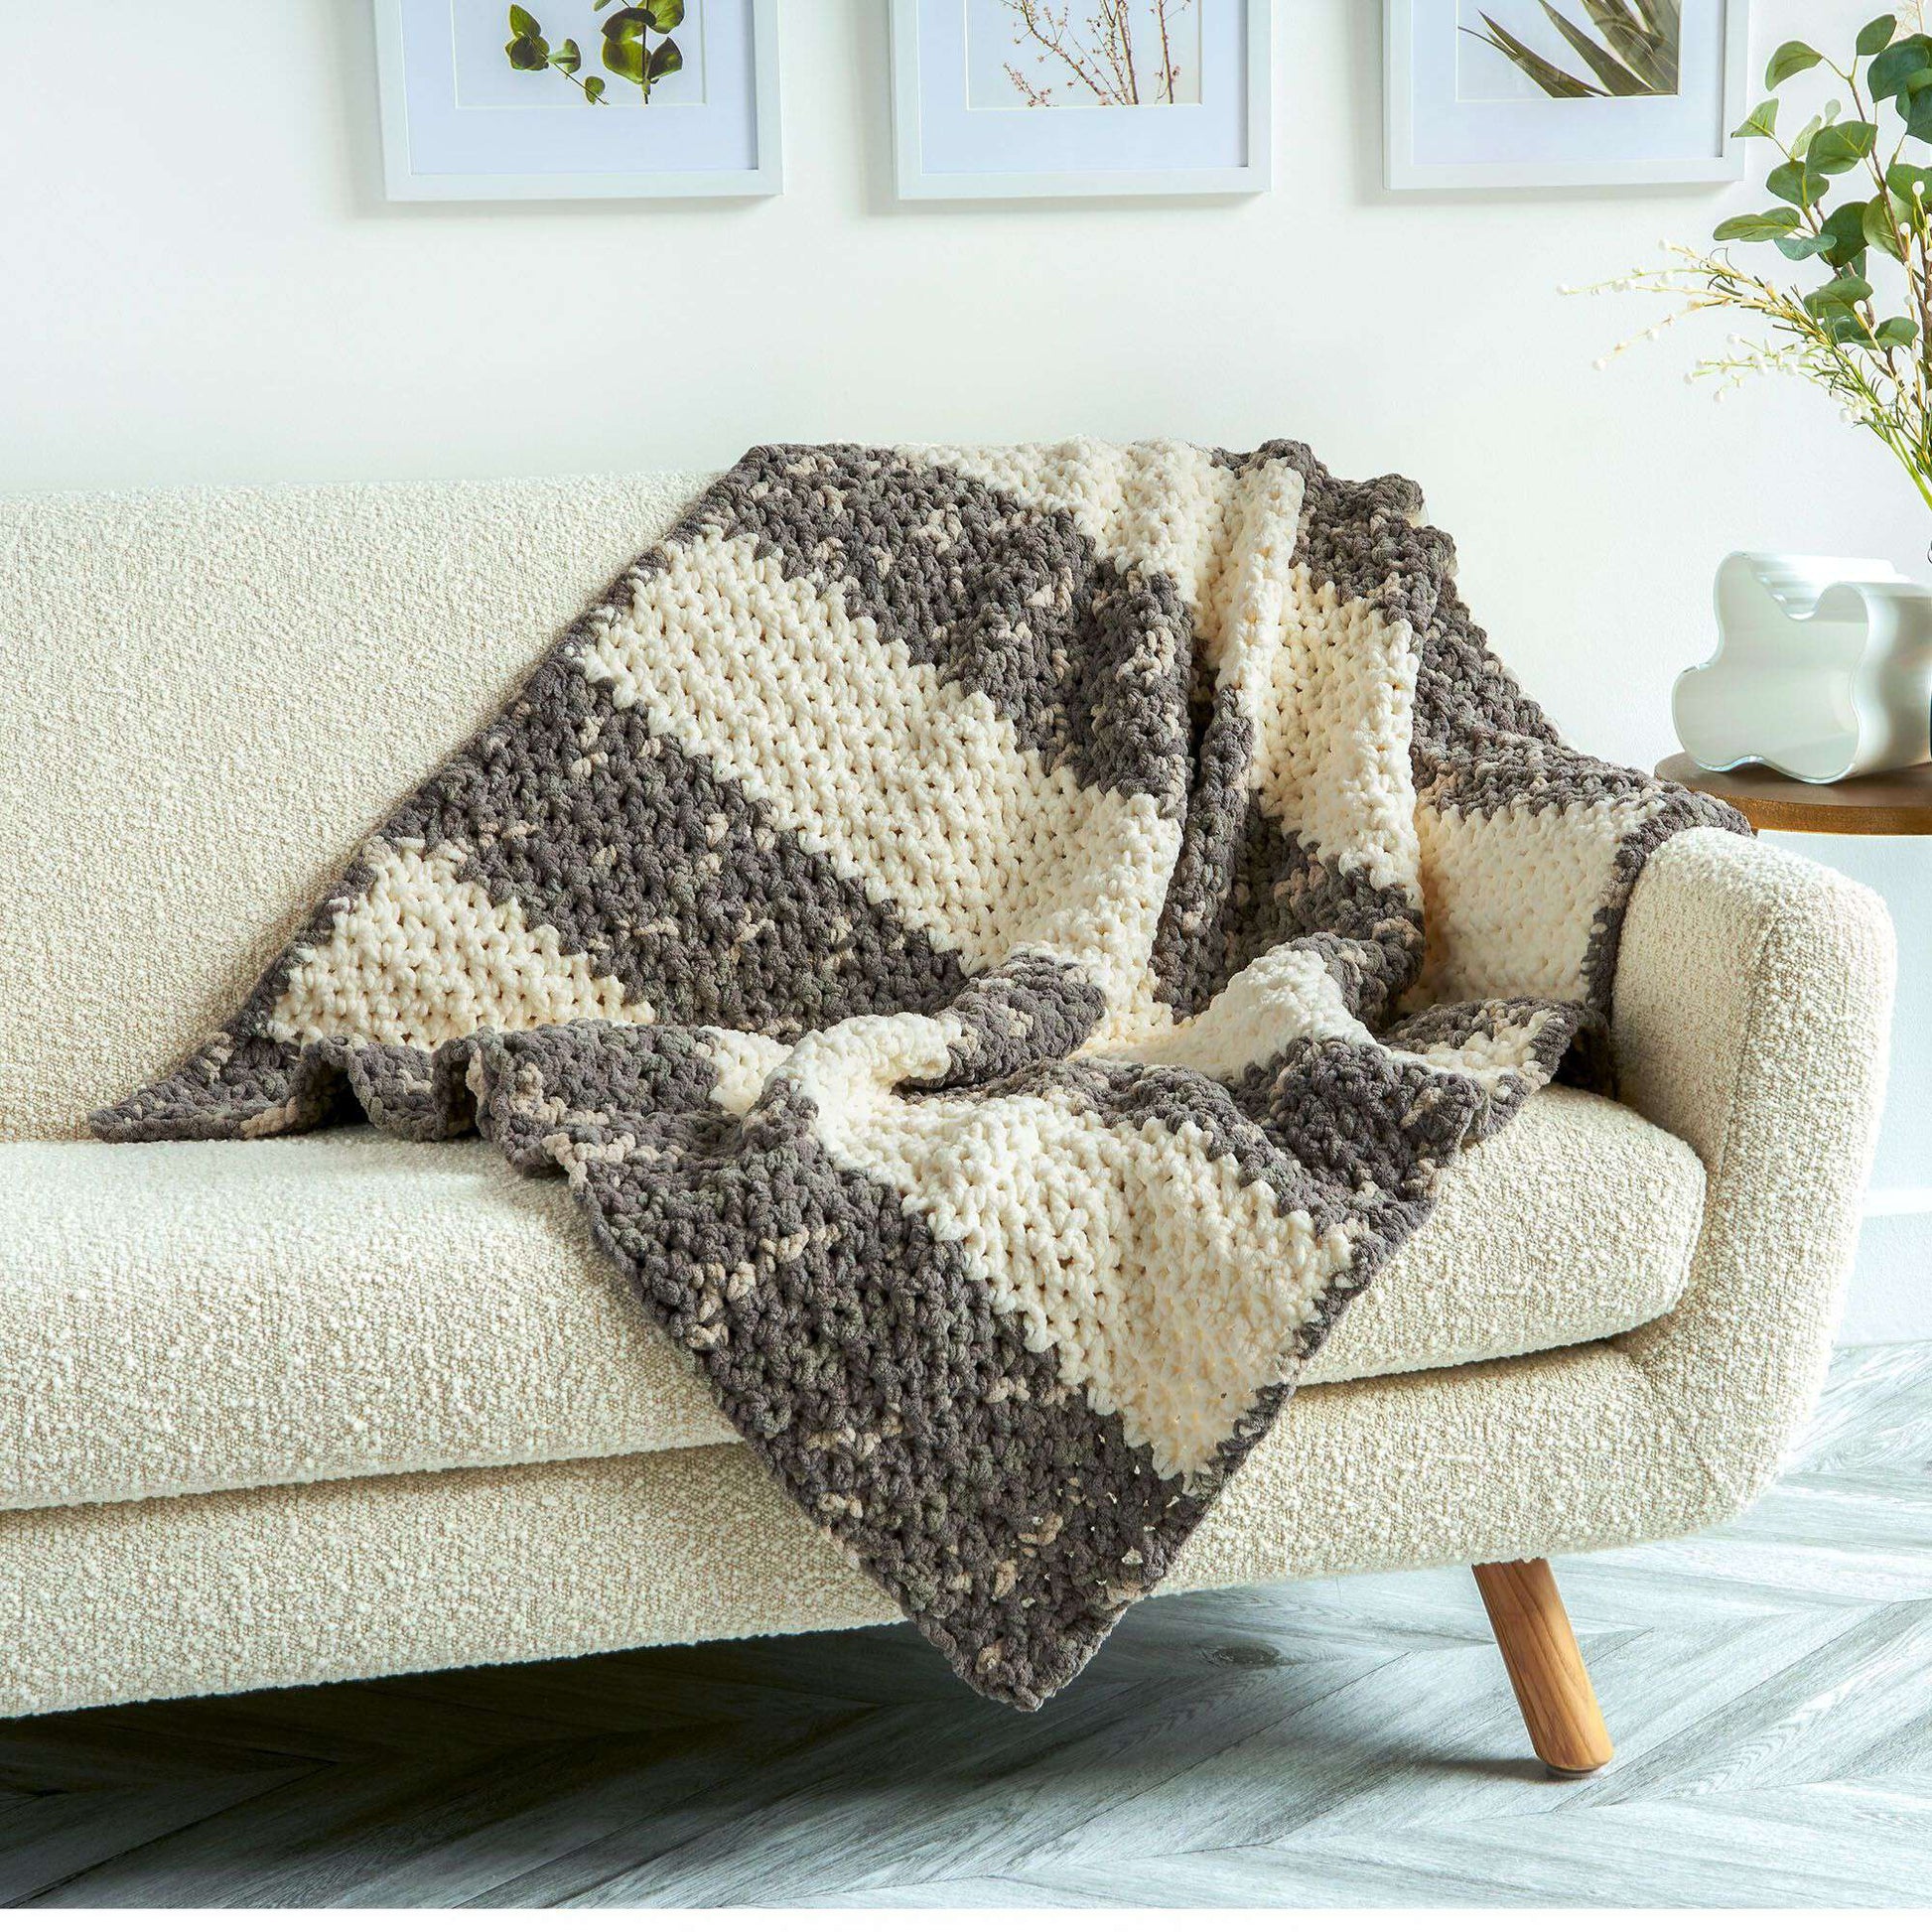 Bernat Blanket Yarn Crochet Value Pack with Canvas Bag - Clearance